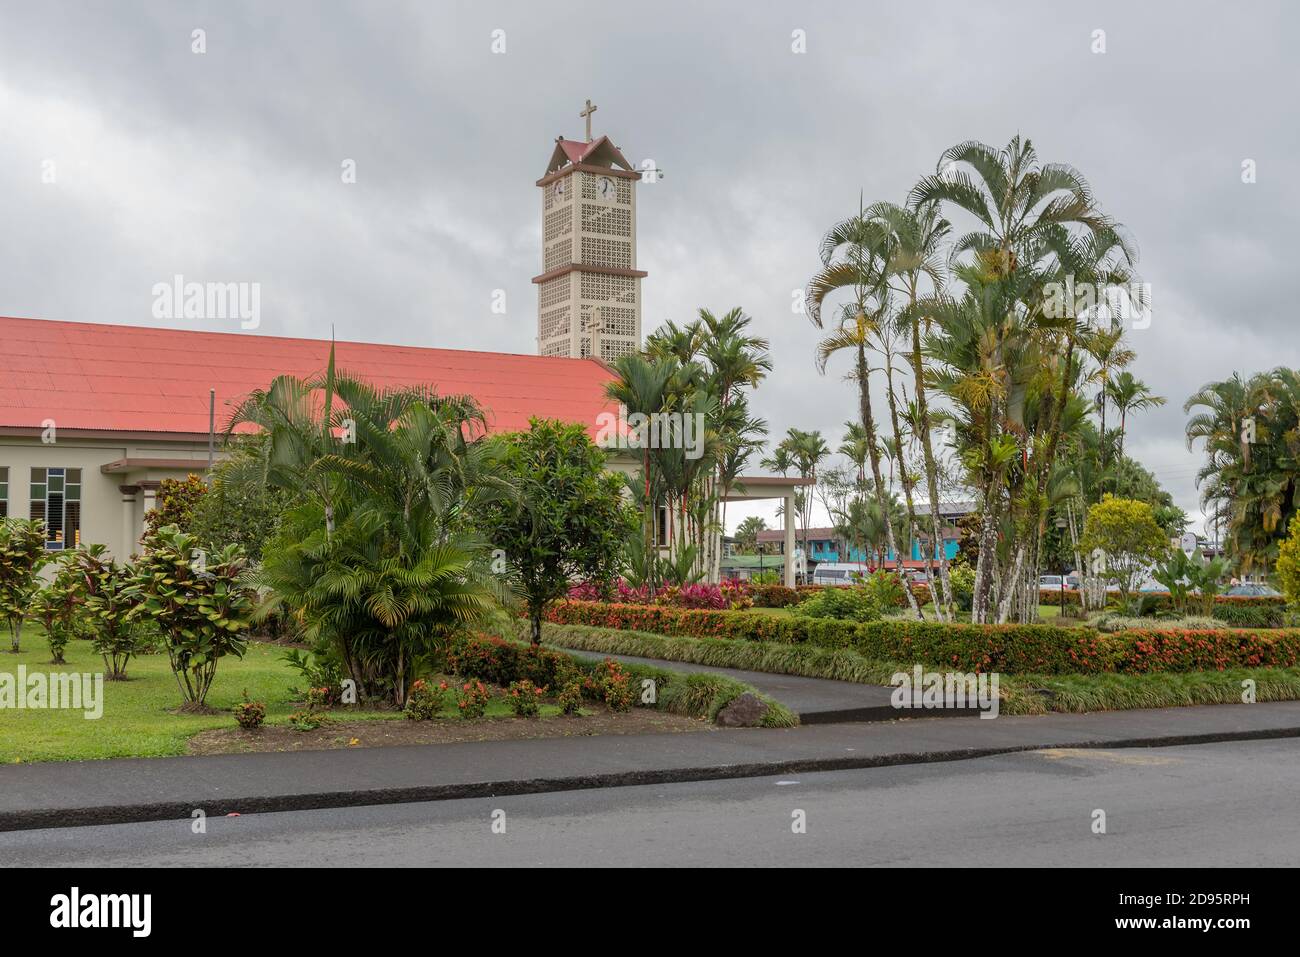 the catholic church of San Juan Bosco in La Fortuna, Costa Rica Stock Photo